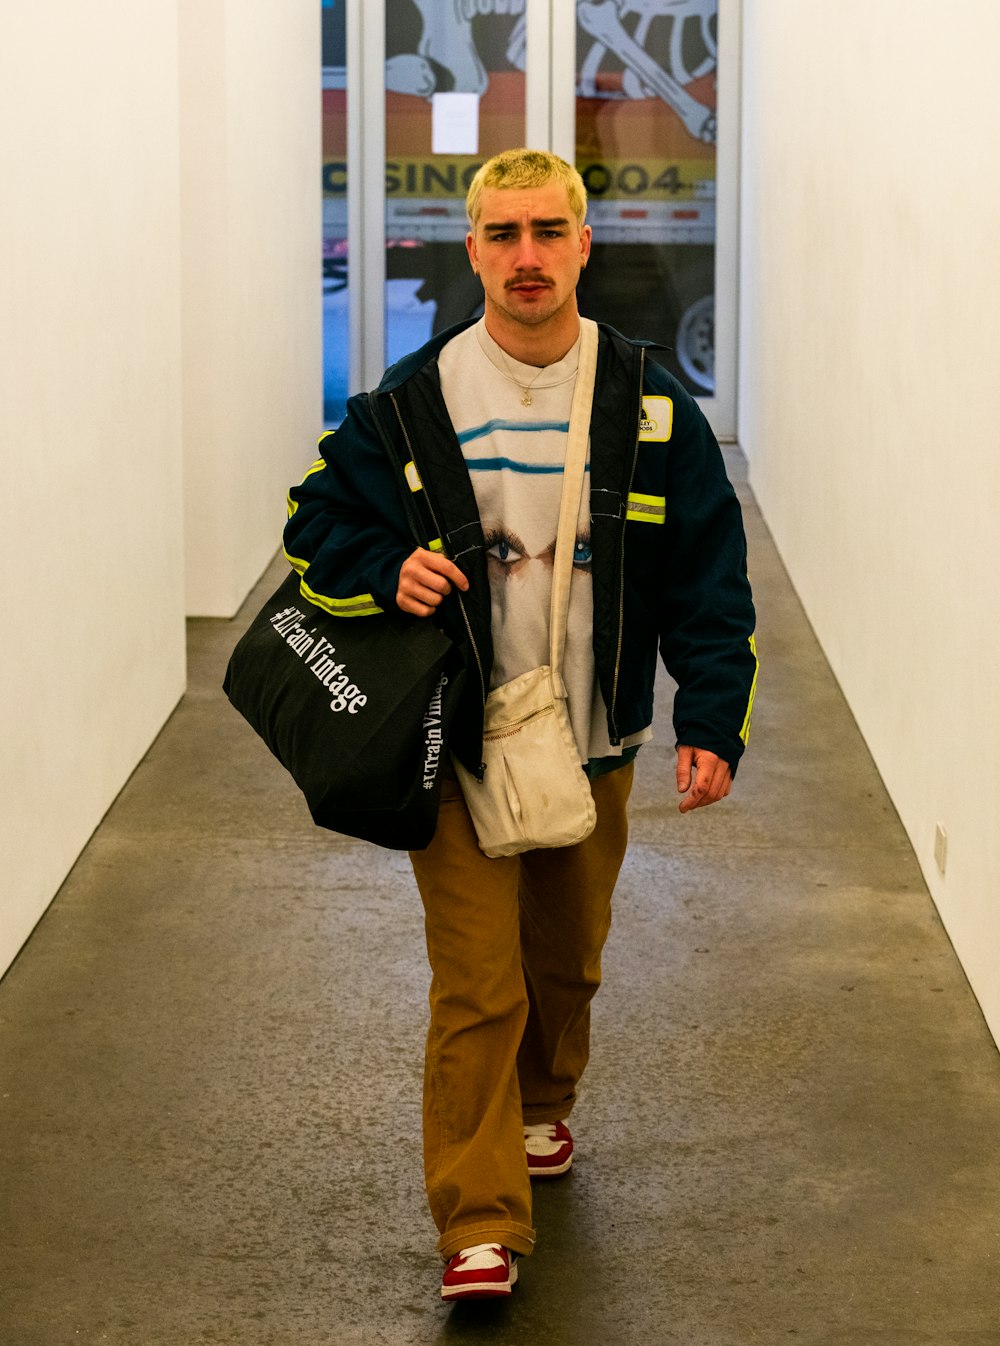 a man walking down a hallway carrying a bag